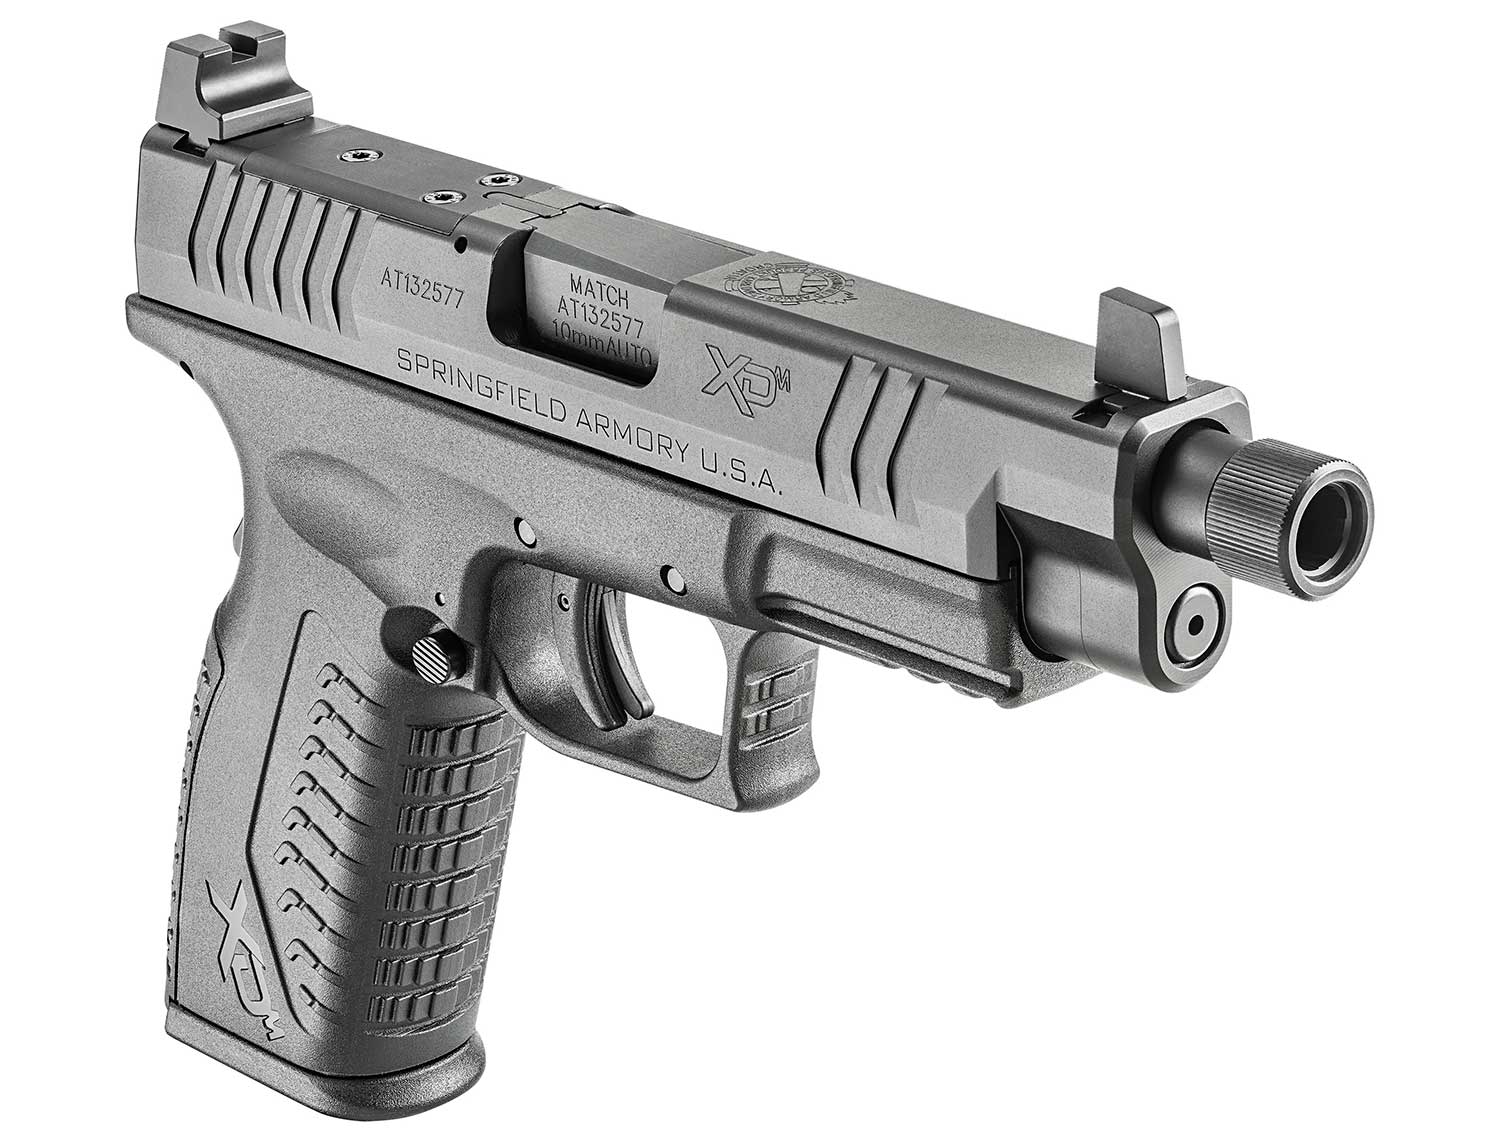 A Springfield Armory XDM10 handgun.